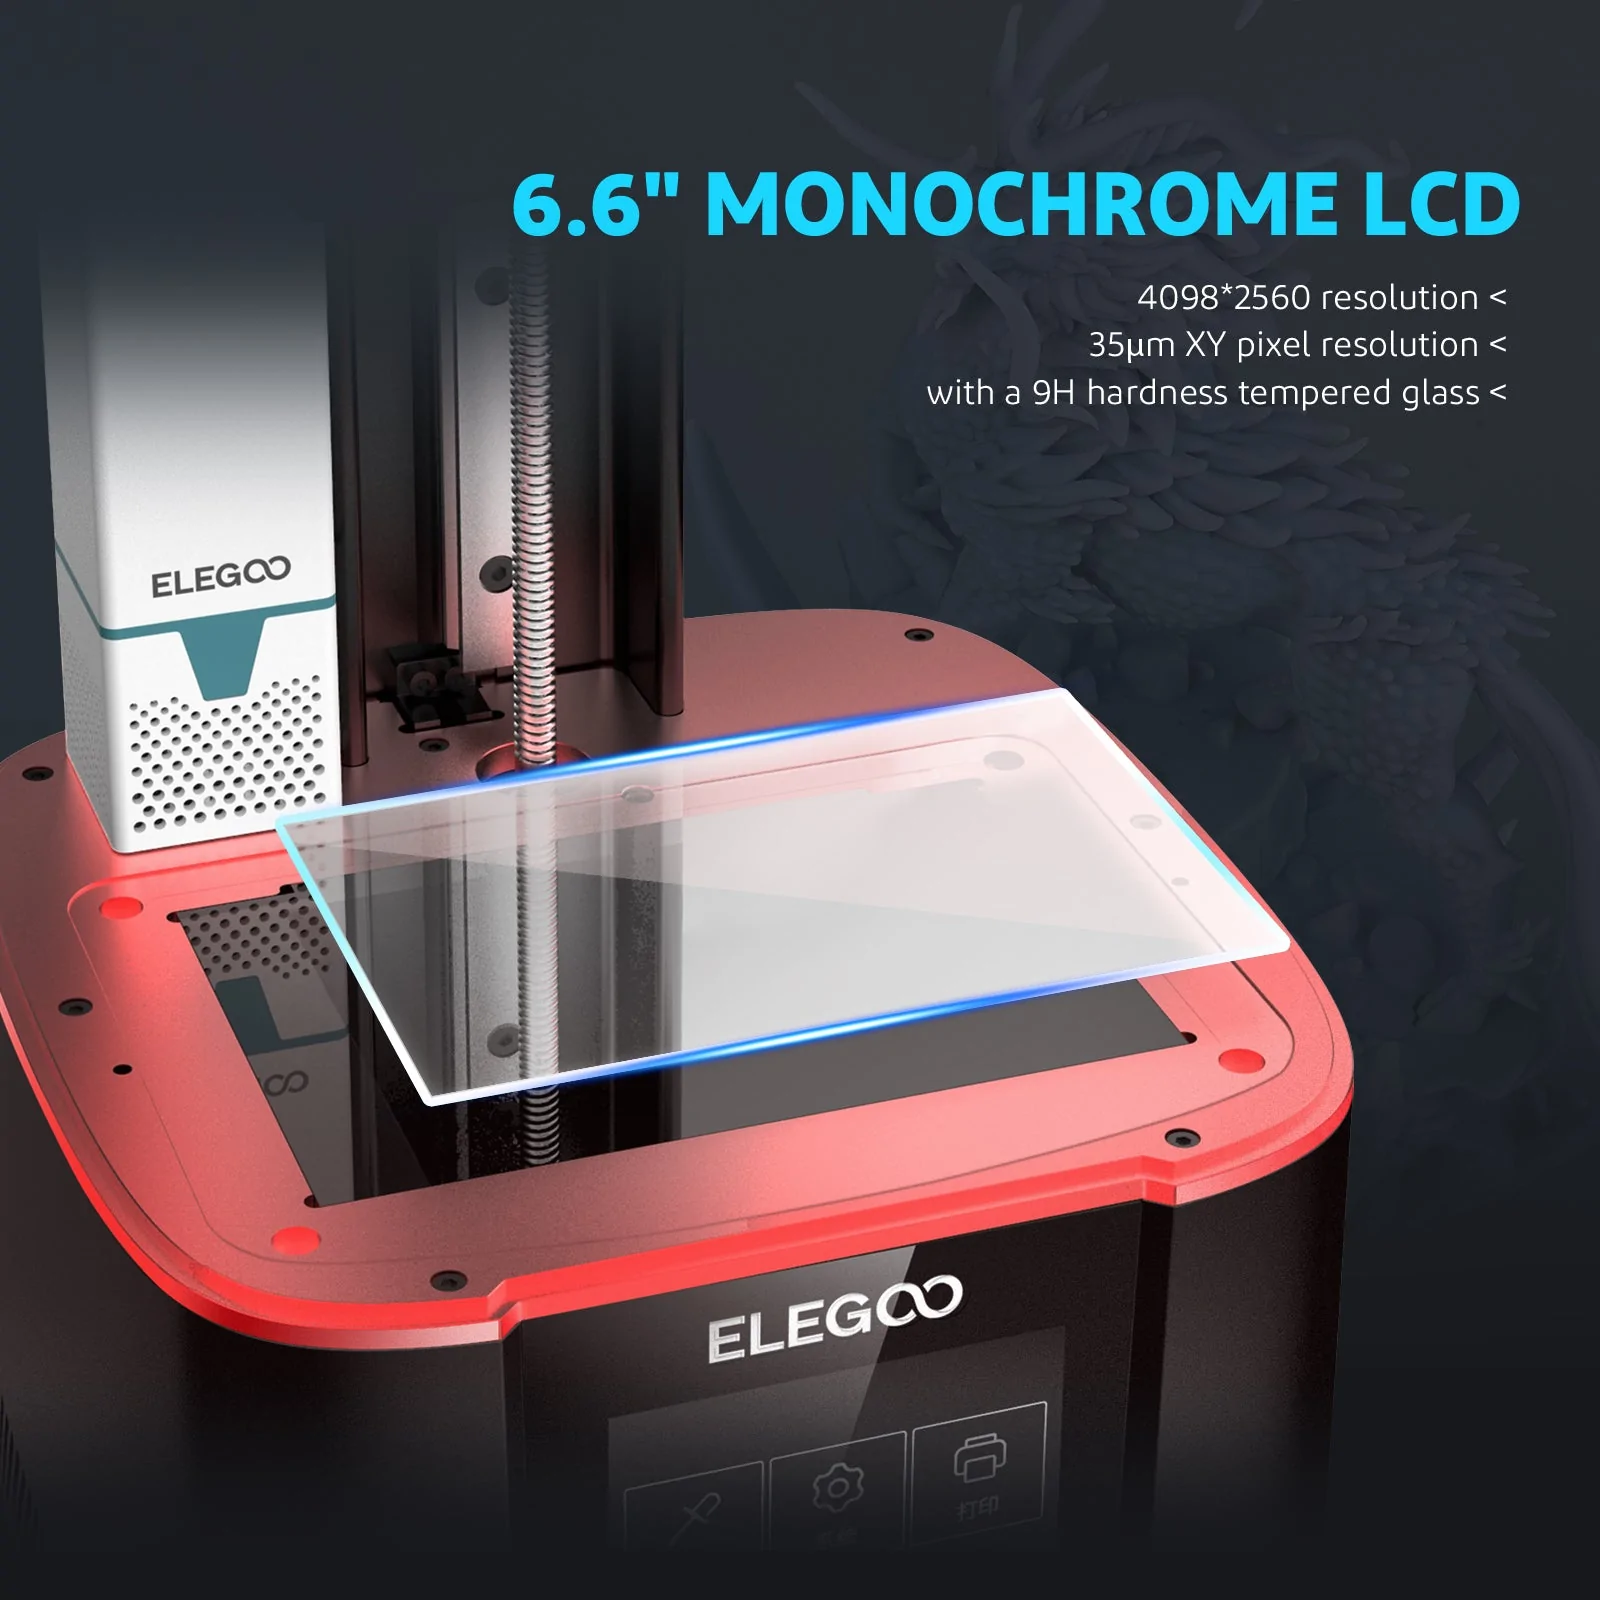 Elegoo Mars 3 Pro comes with 4K Monochrome LCD